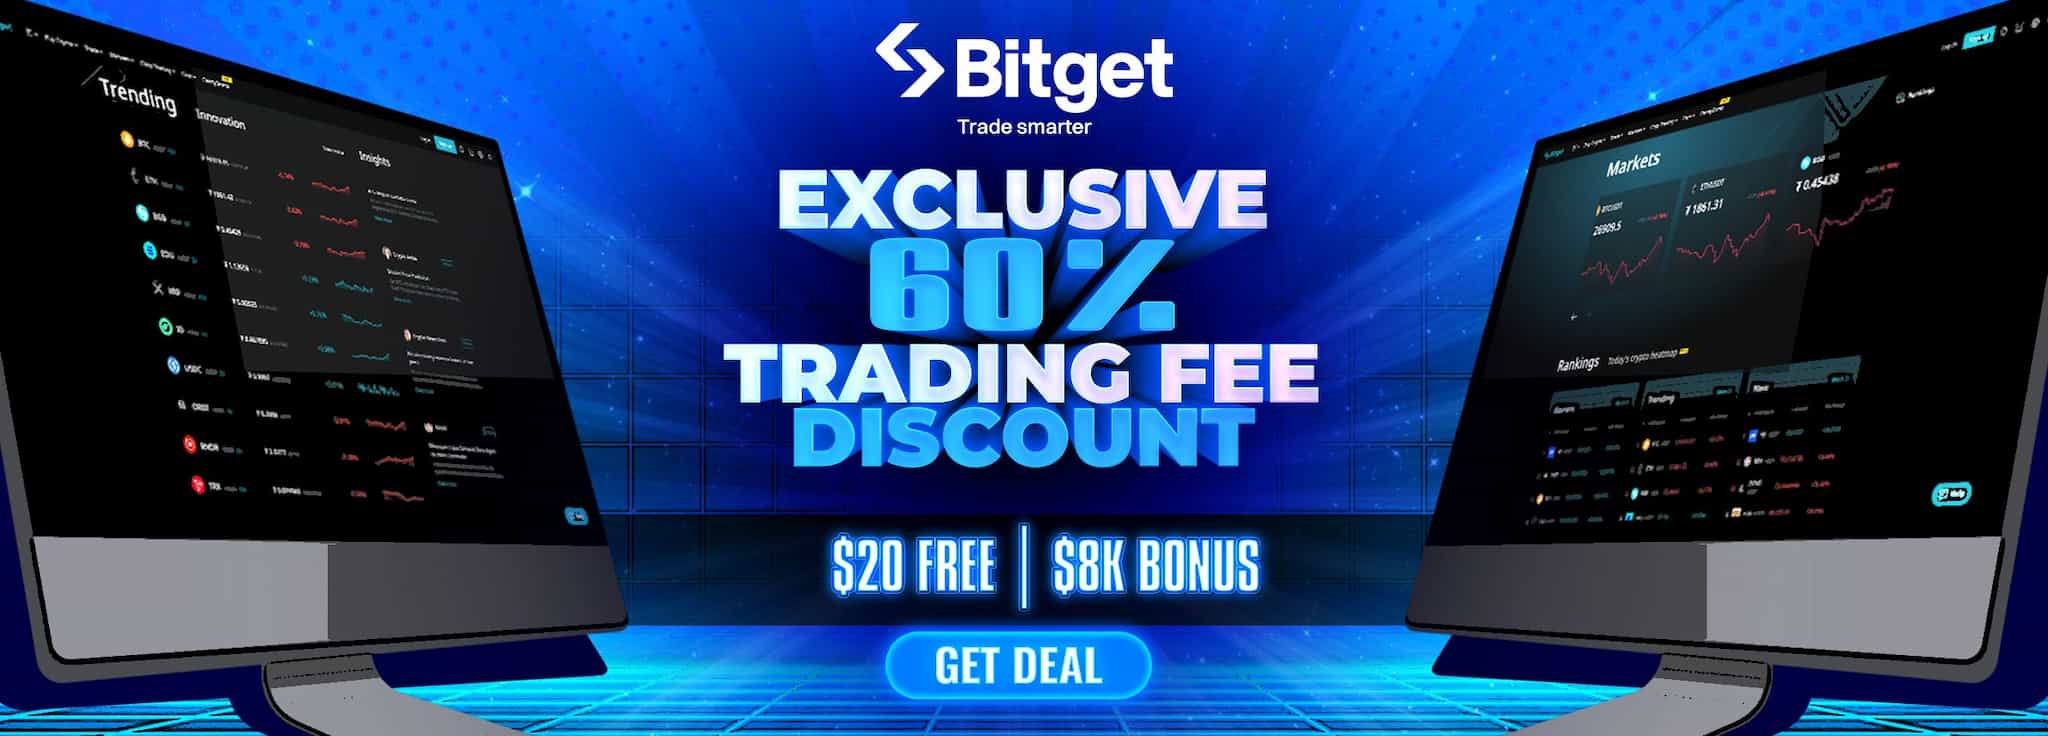 Bitget-Deals-CTA.jpg